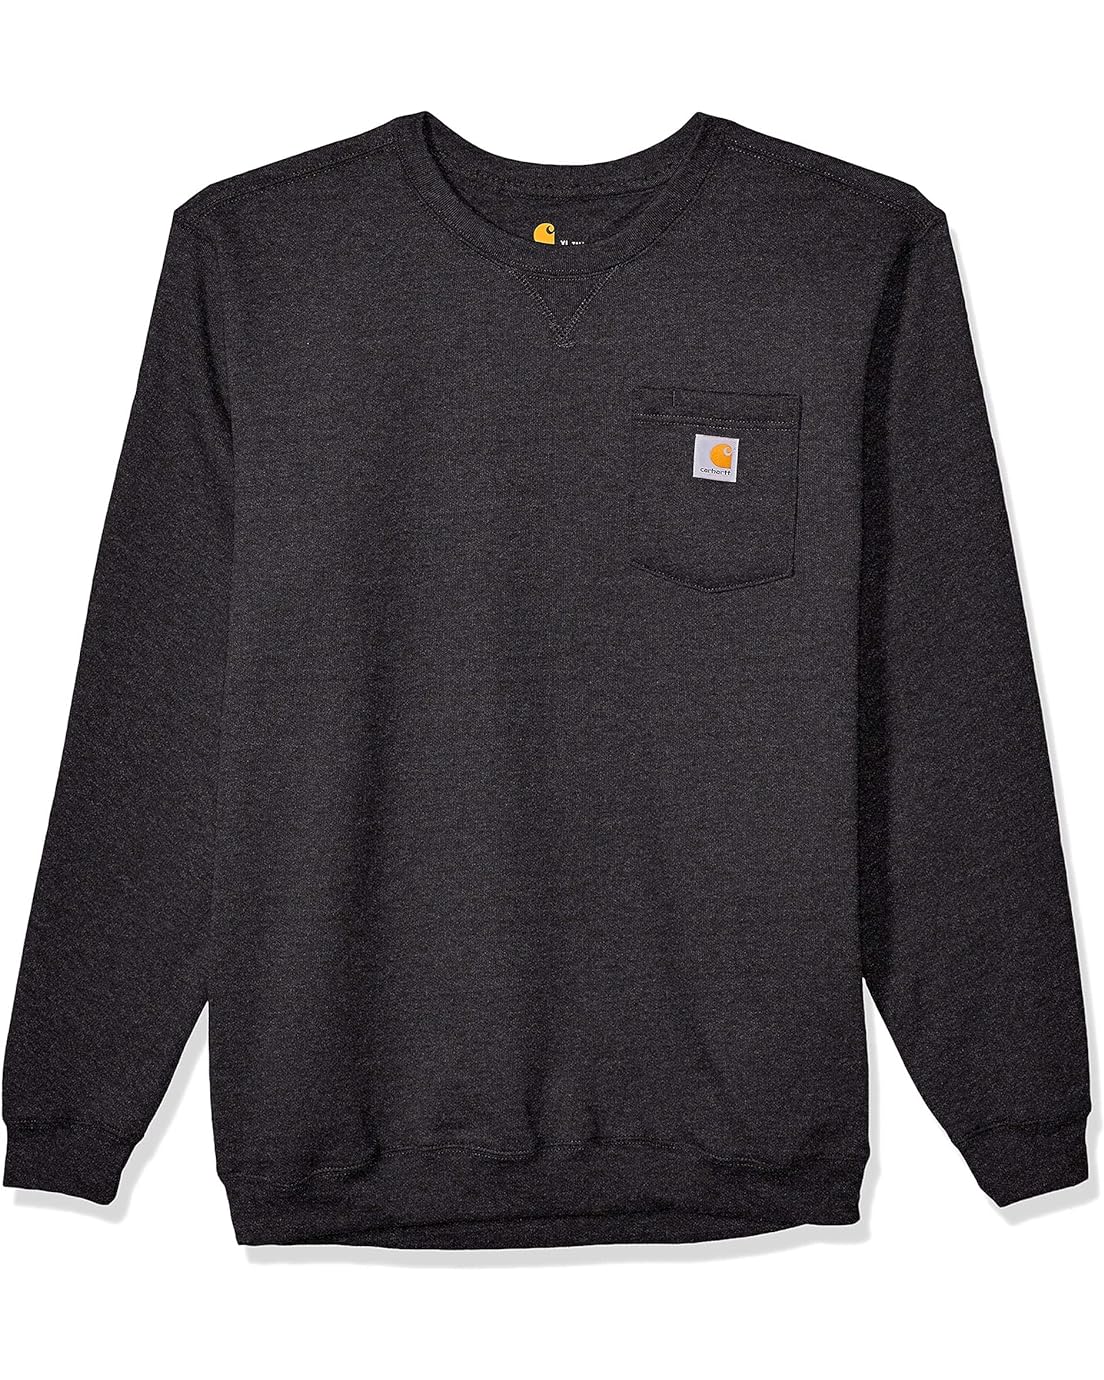 Carhartt Mens Crewneck Pocket Sweatshirt (Regular and Big & Tall Sizes)